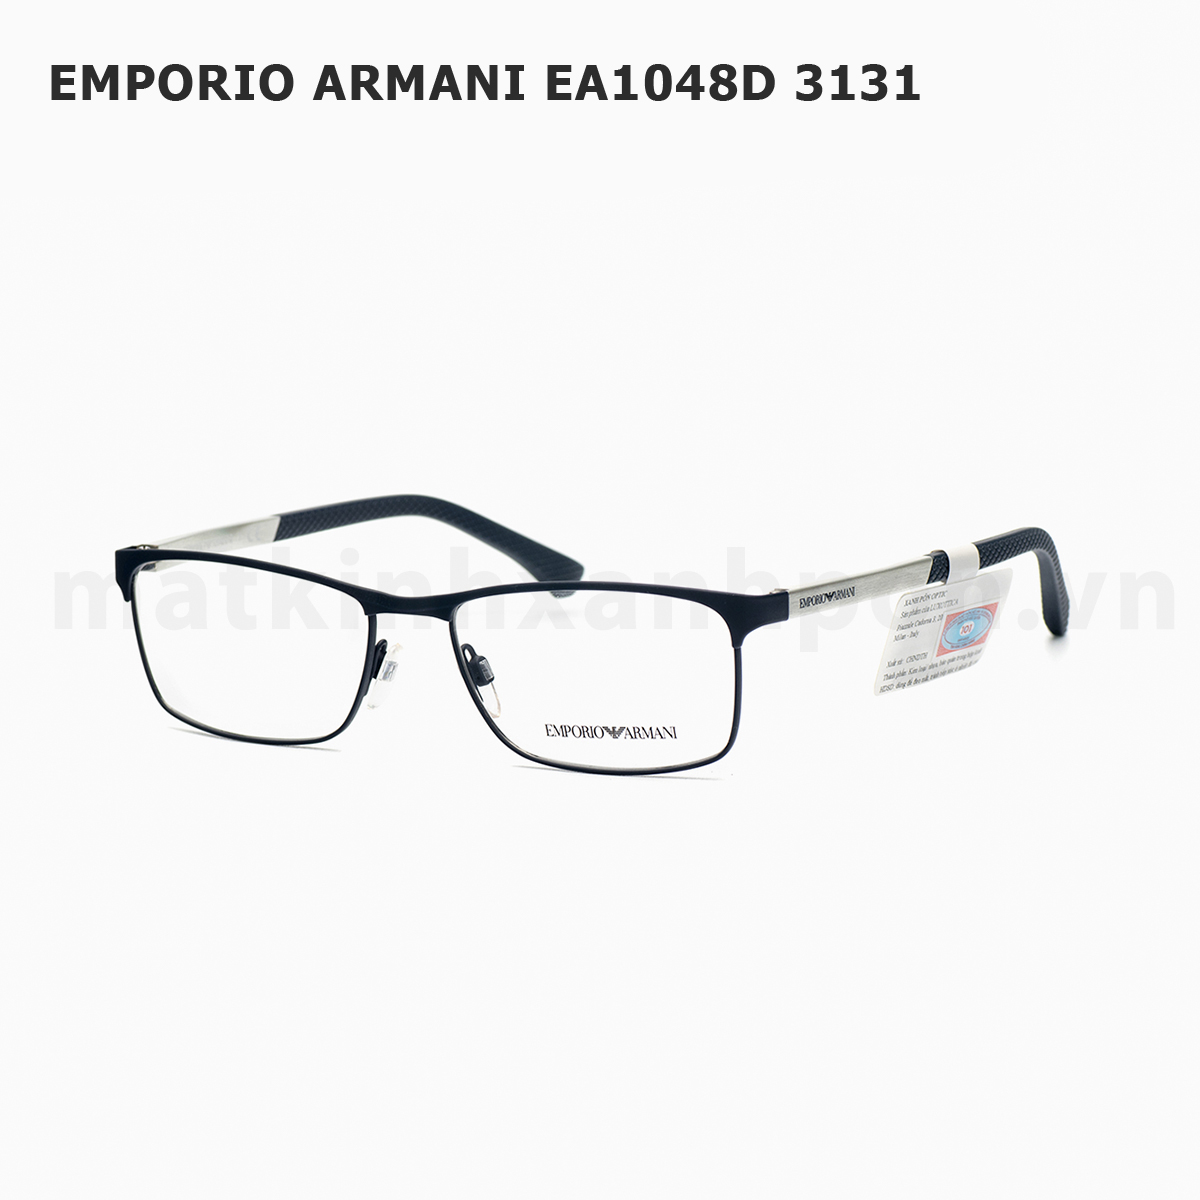 Emporio Armani EA1048D 3131